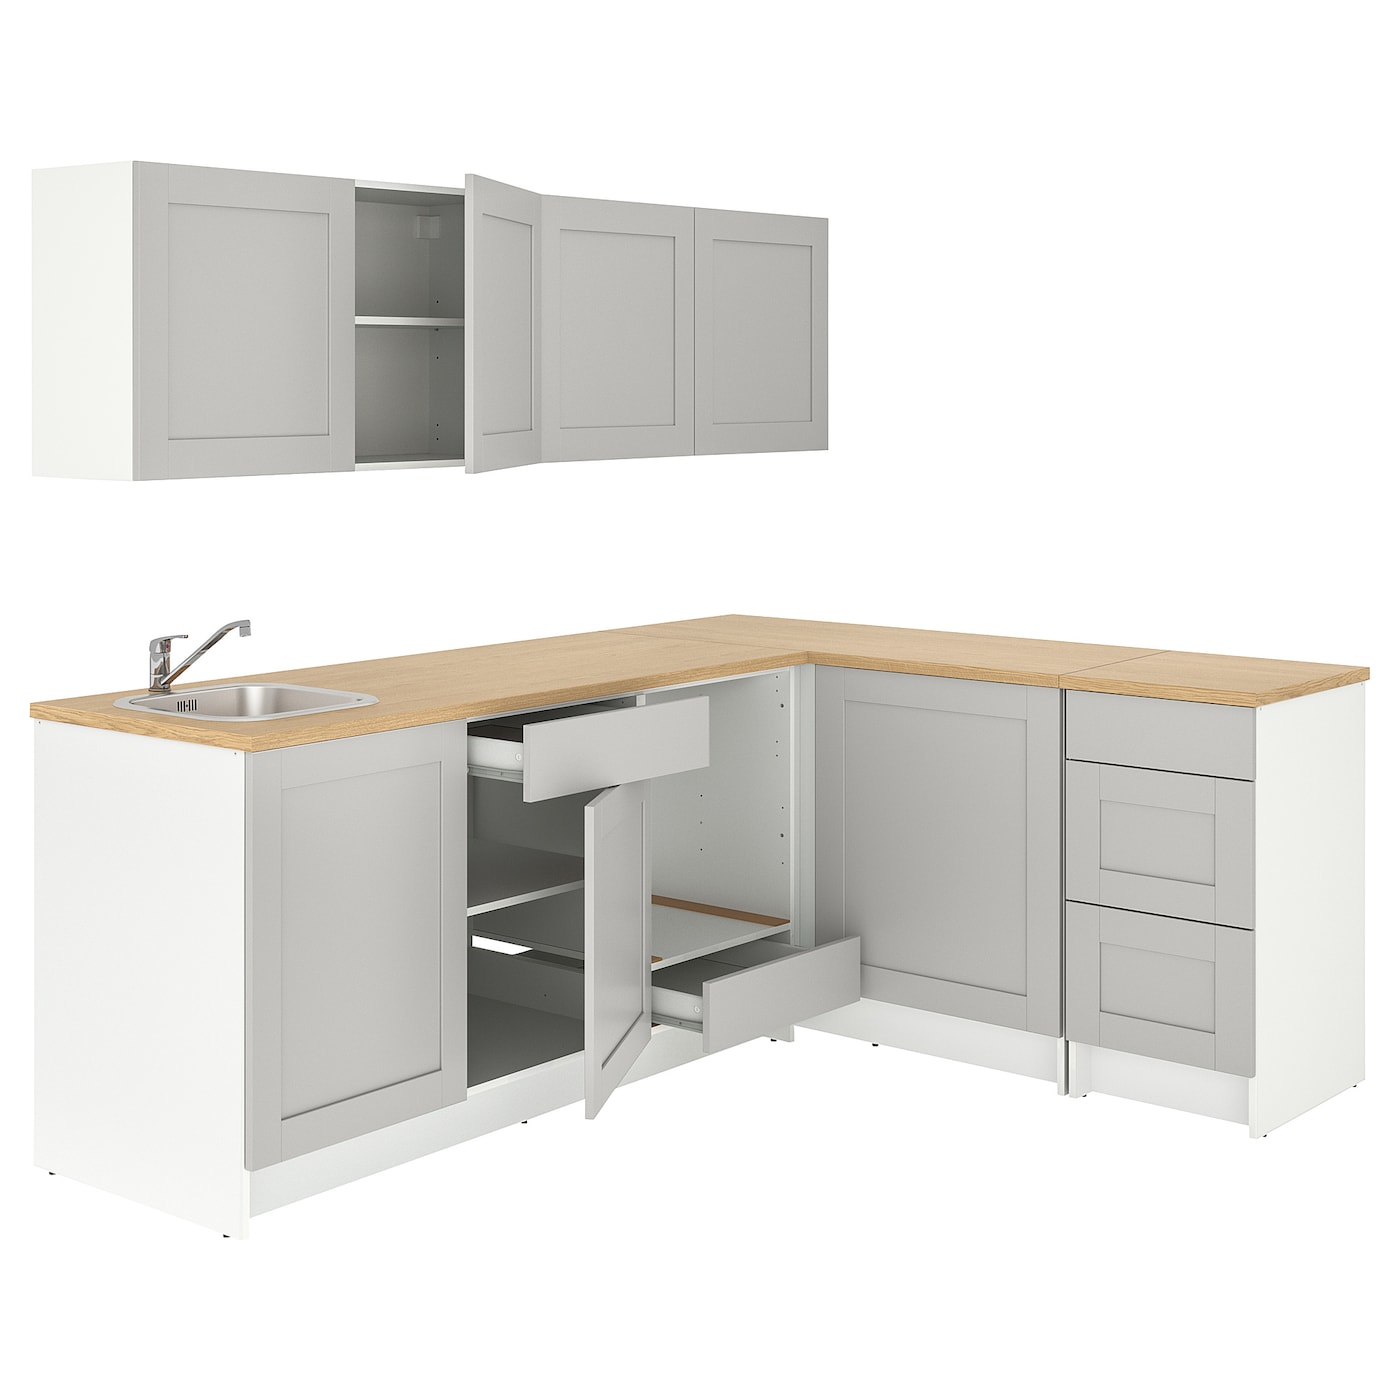 Угловая кухня -  KNOXHULT IKEA/ КНОКСХУЛЬТ ИКЕА, 243х220 см, белый/серый/бежевый